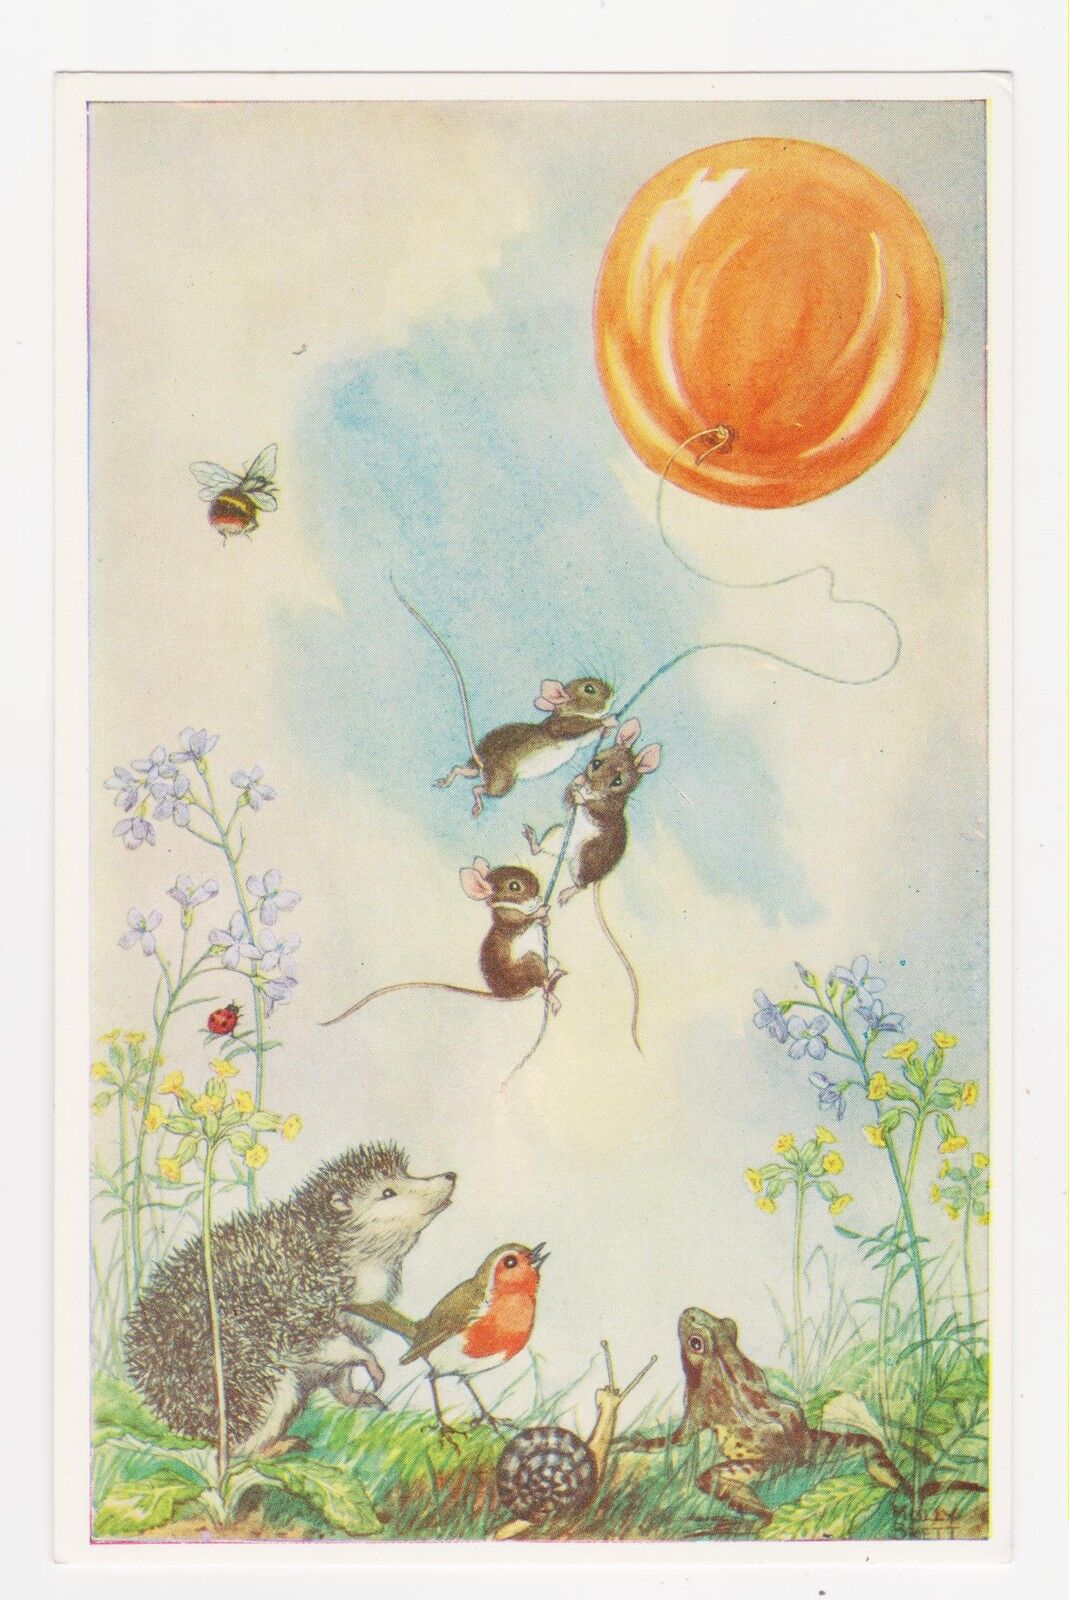 Medici Society Postcard,PK314,Balloon Goes Up,Mice,Marmot,Lady Bug,Frog,M.Brett